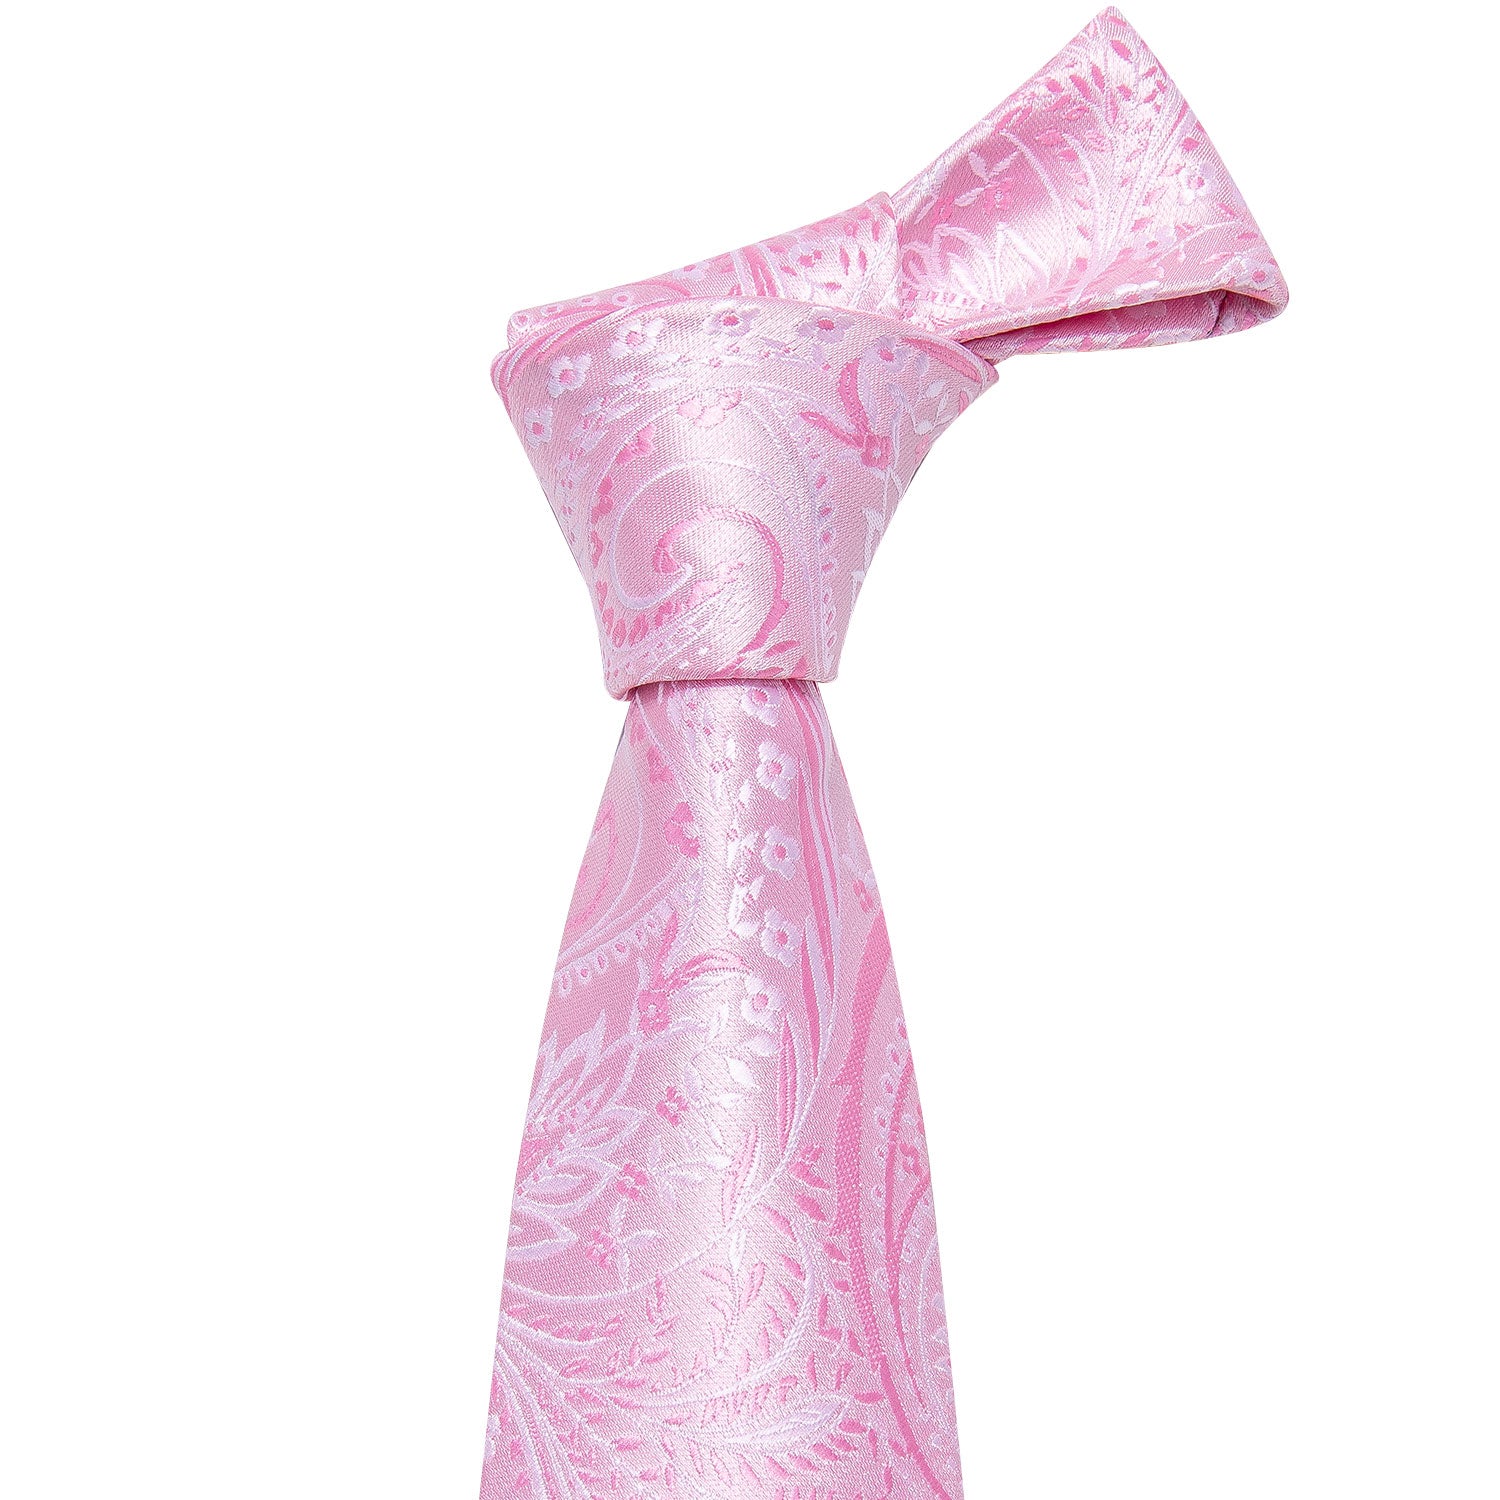 Beautiful Pink Floral Men's Tie Pocket Square Cufflinks Set